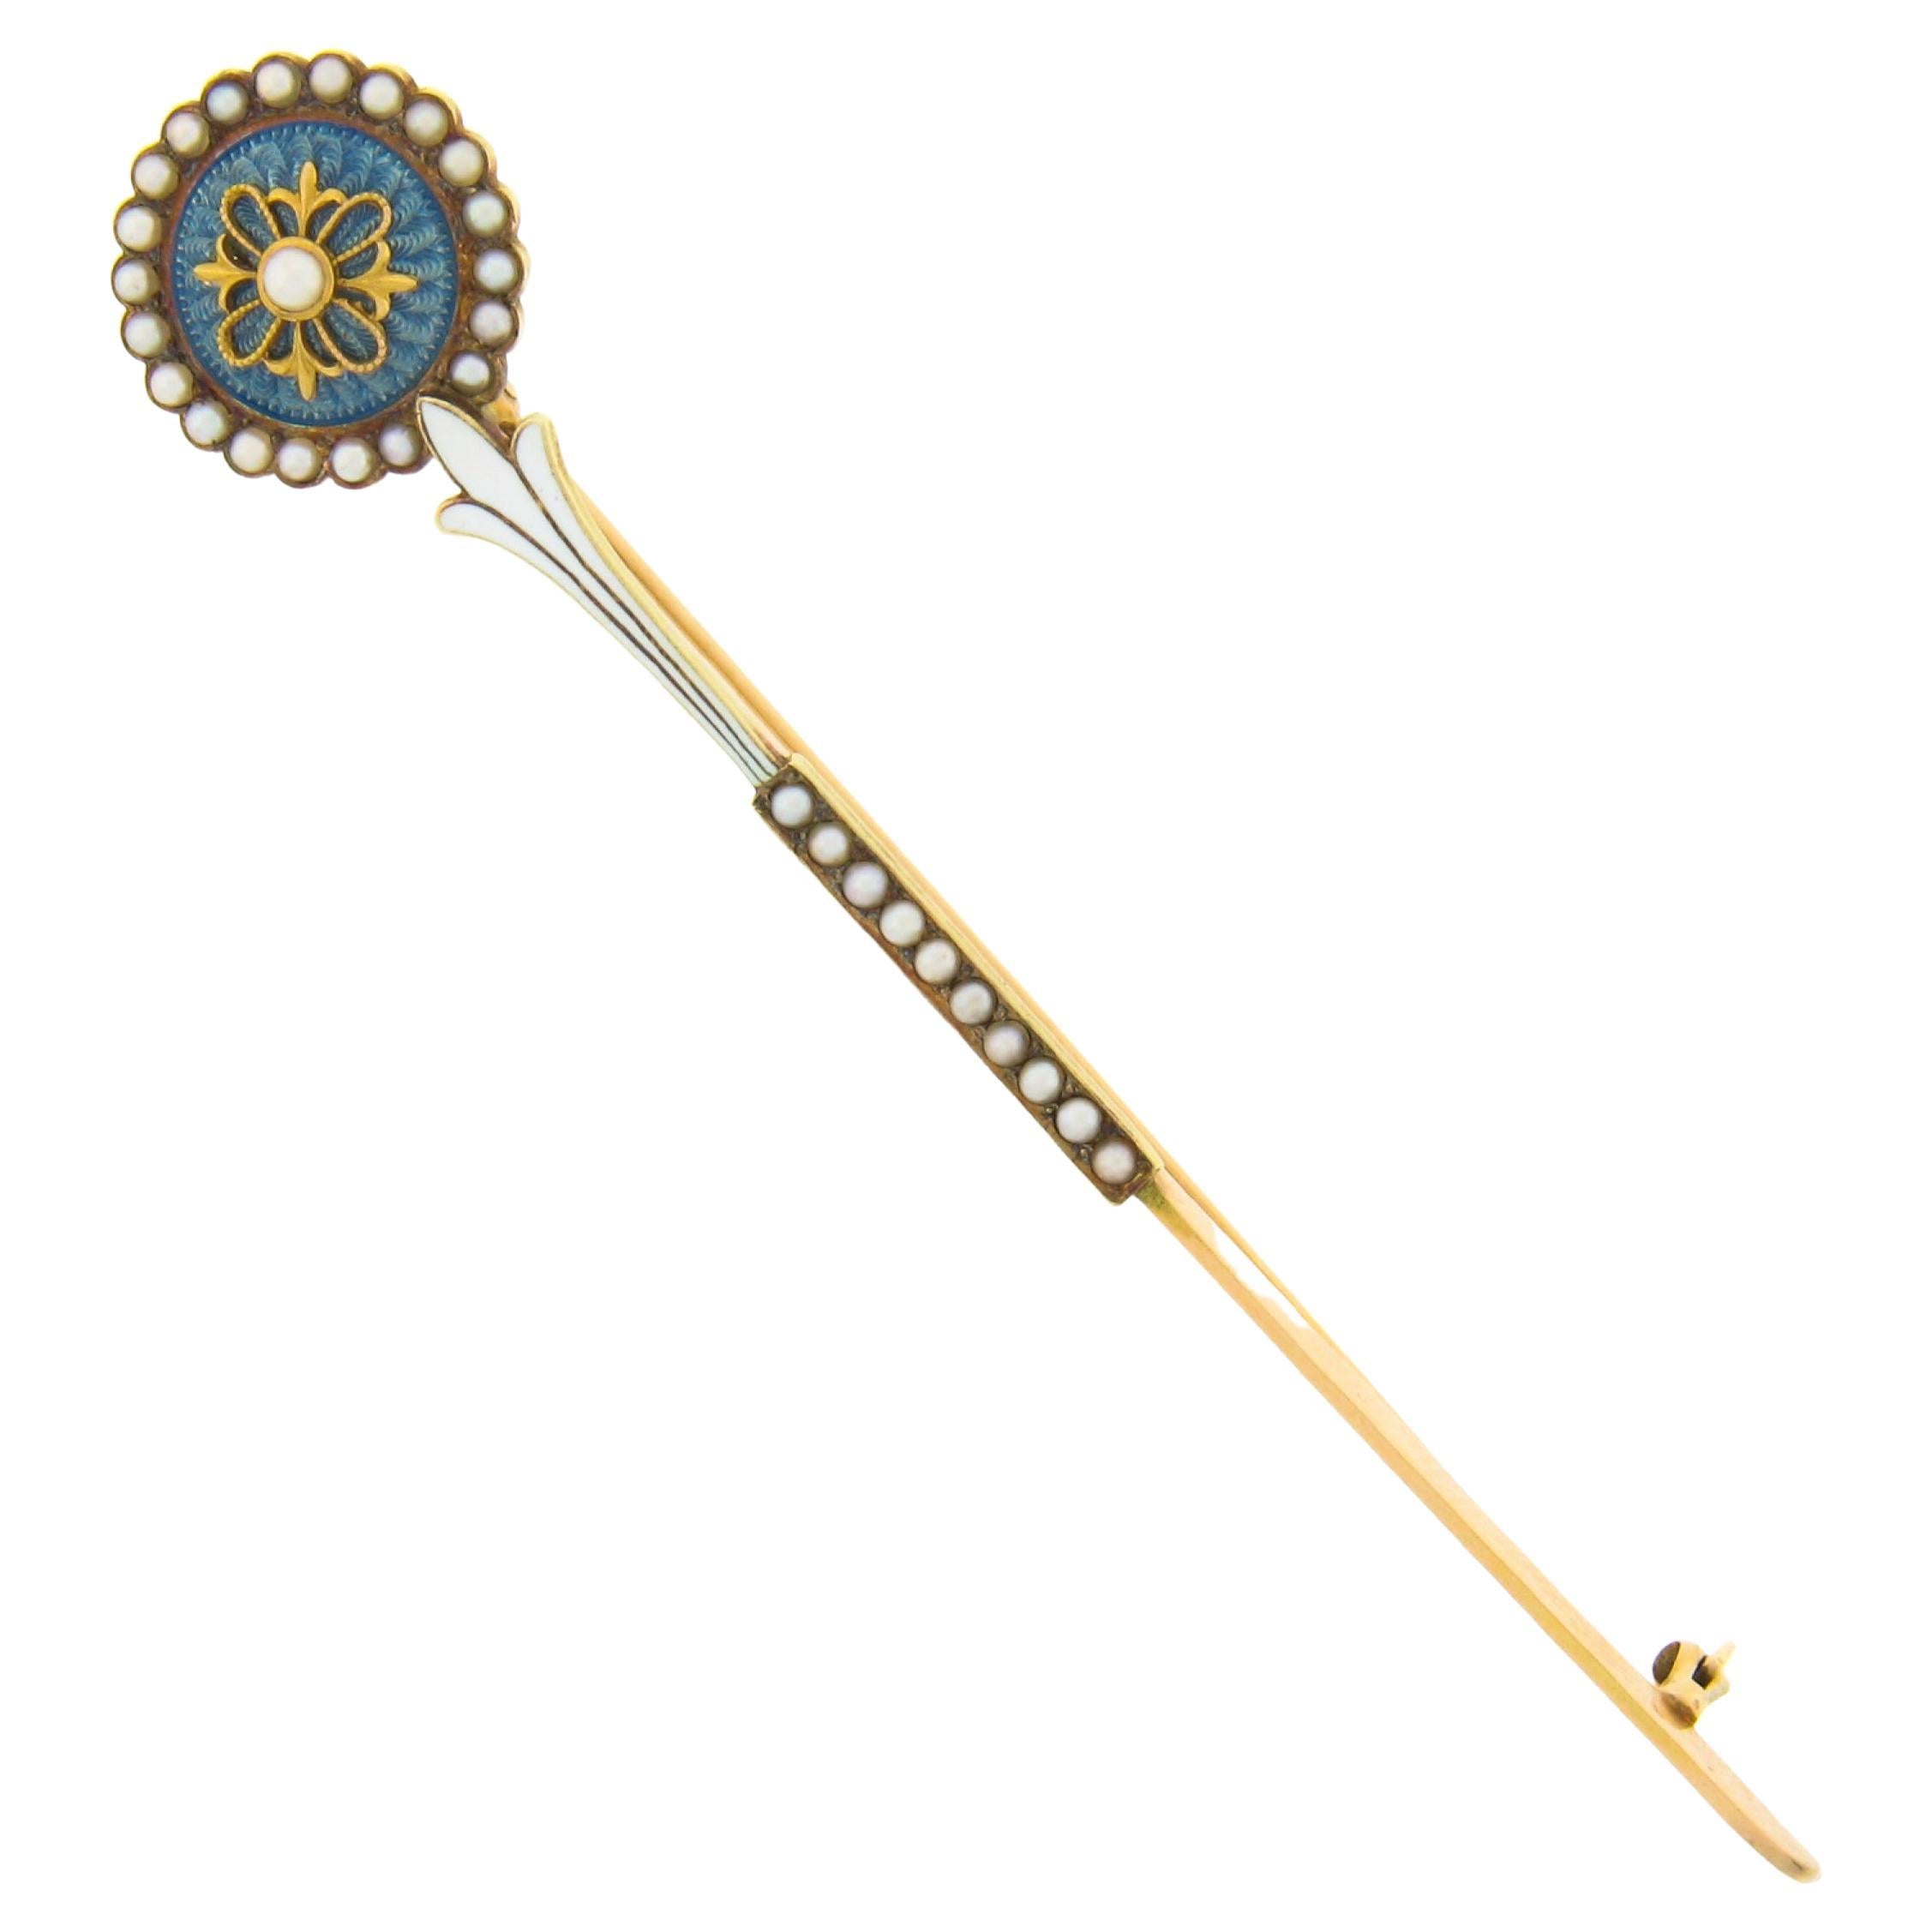 Antique Art Deco Allsopp Bliss Co. 14k Gold Seed Pearl & Enamel Long Pin Brooch For Sale